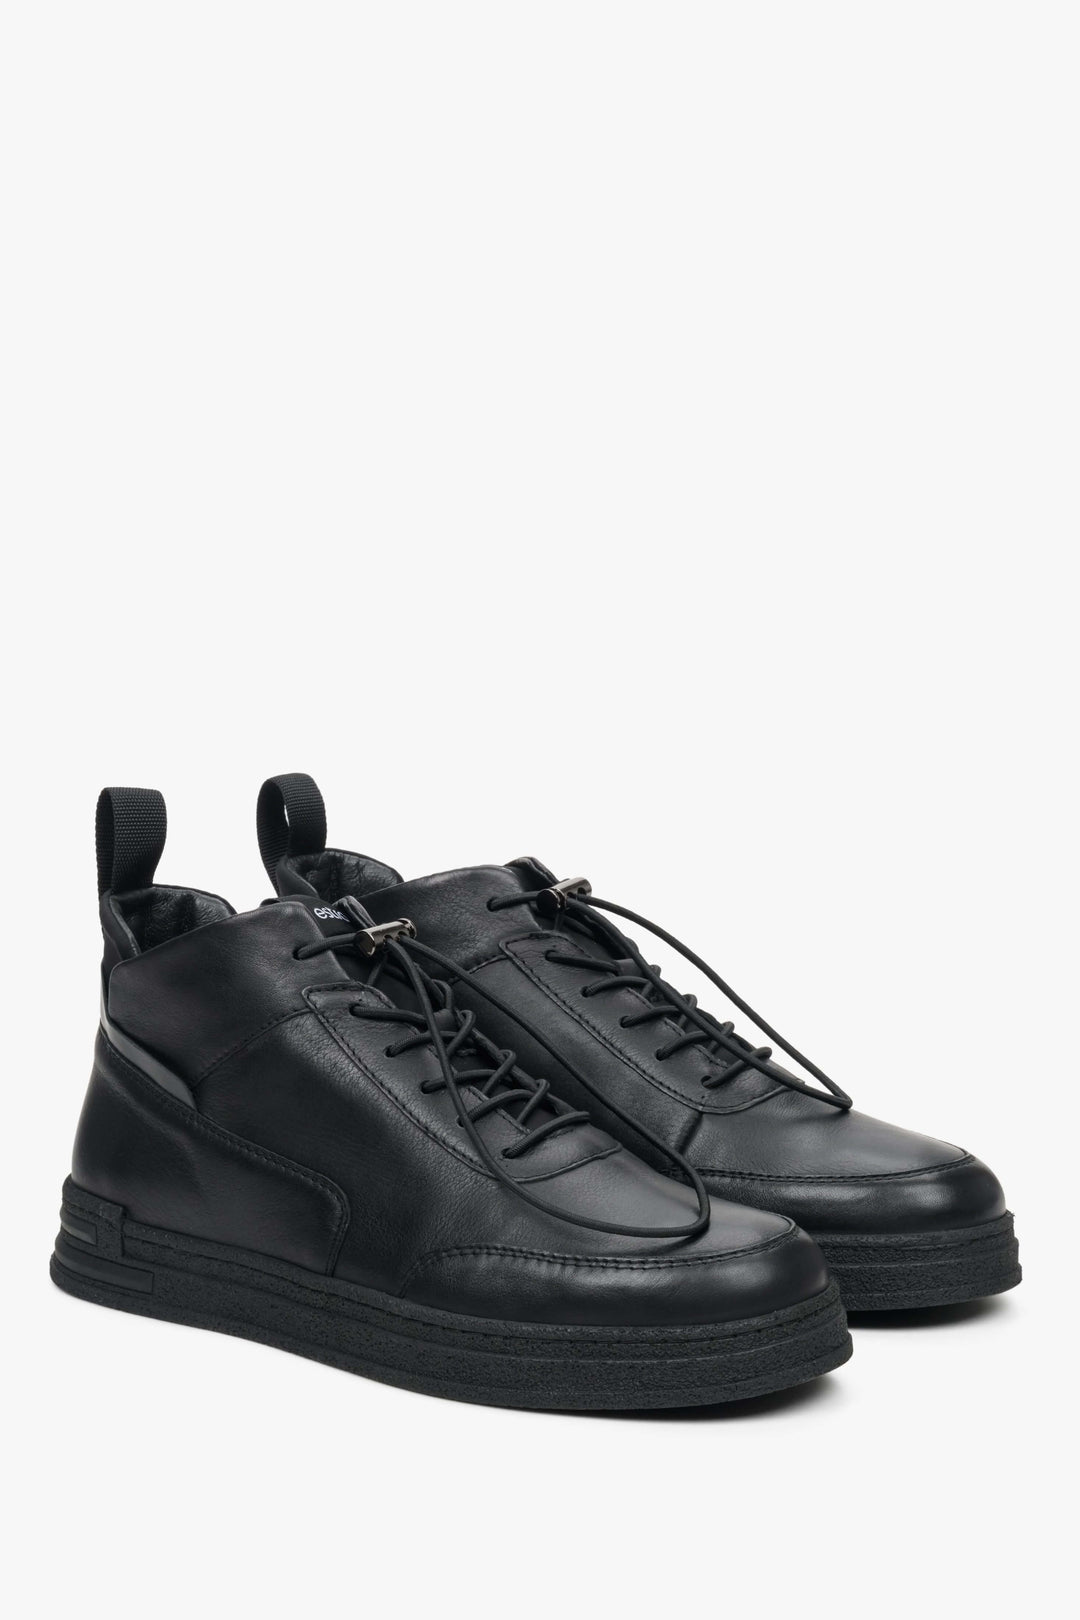 Men's High-top Black Sneakers made of Genuine Leather Estro ER00112213.